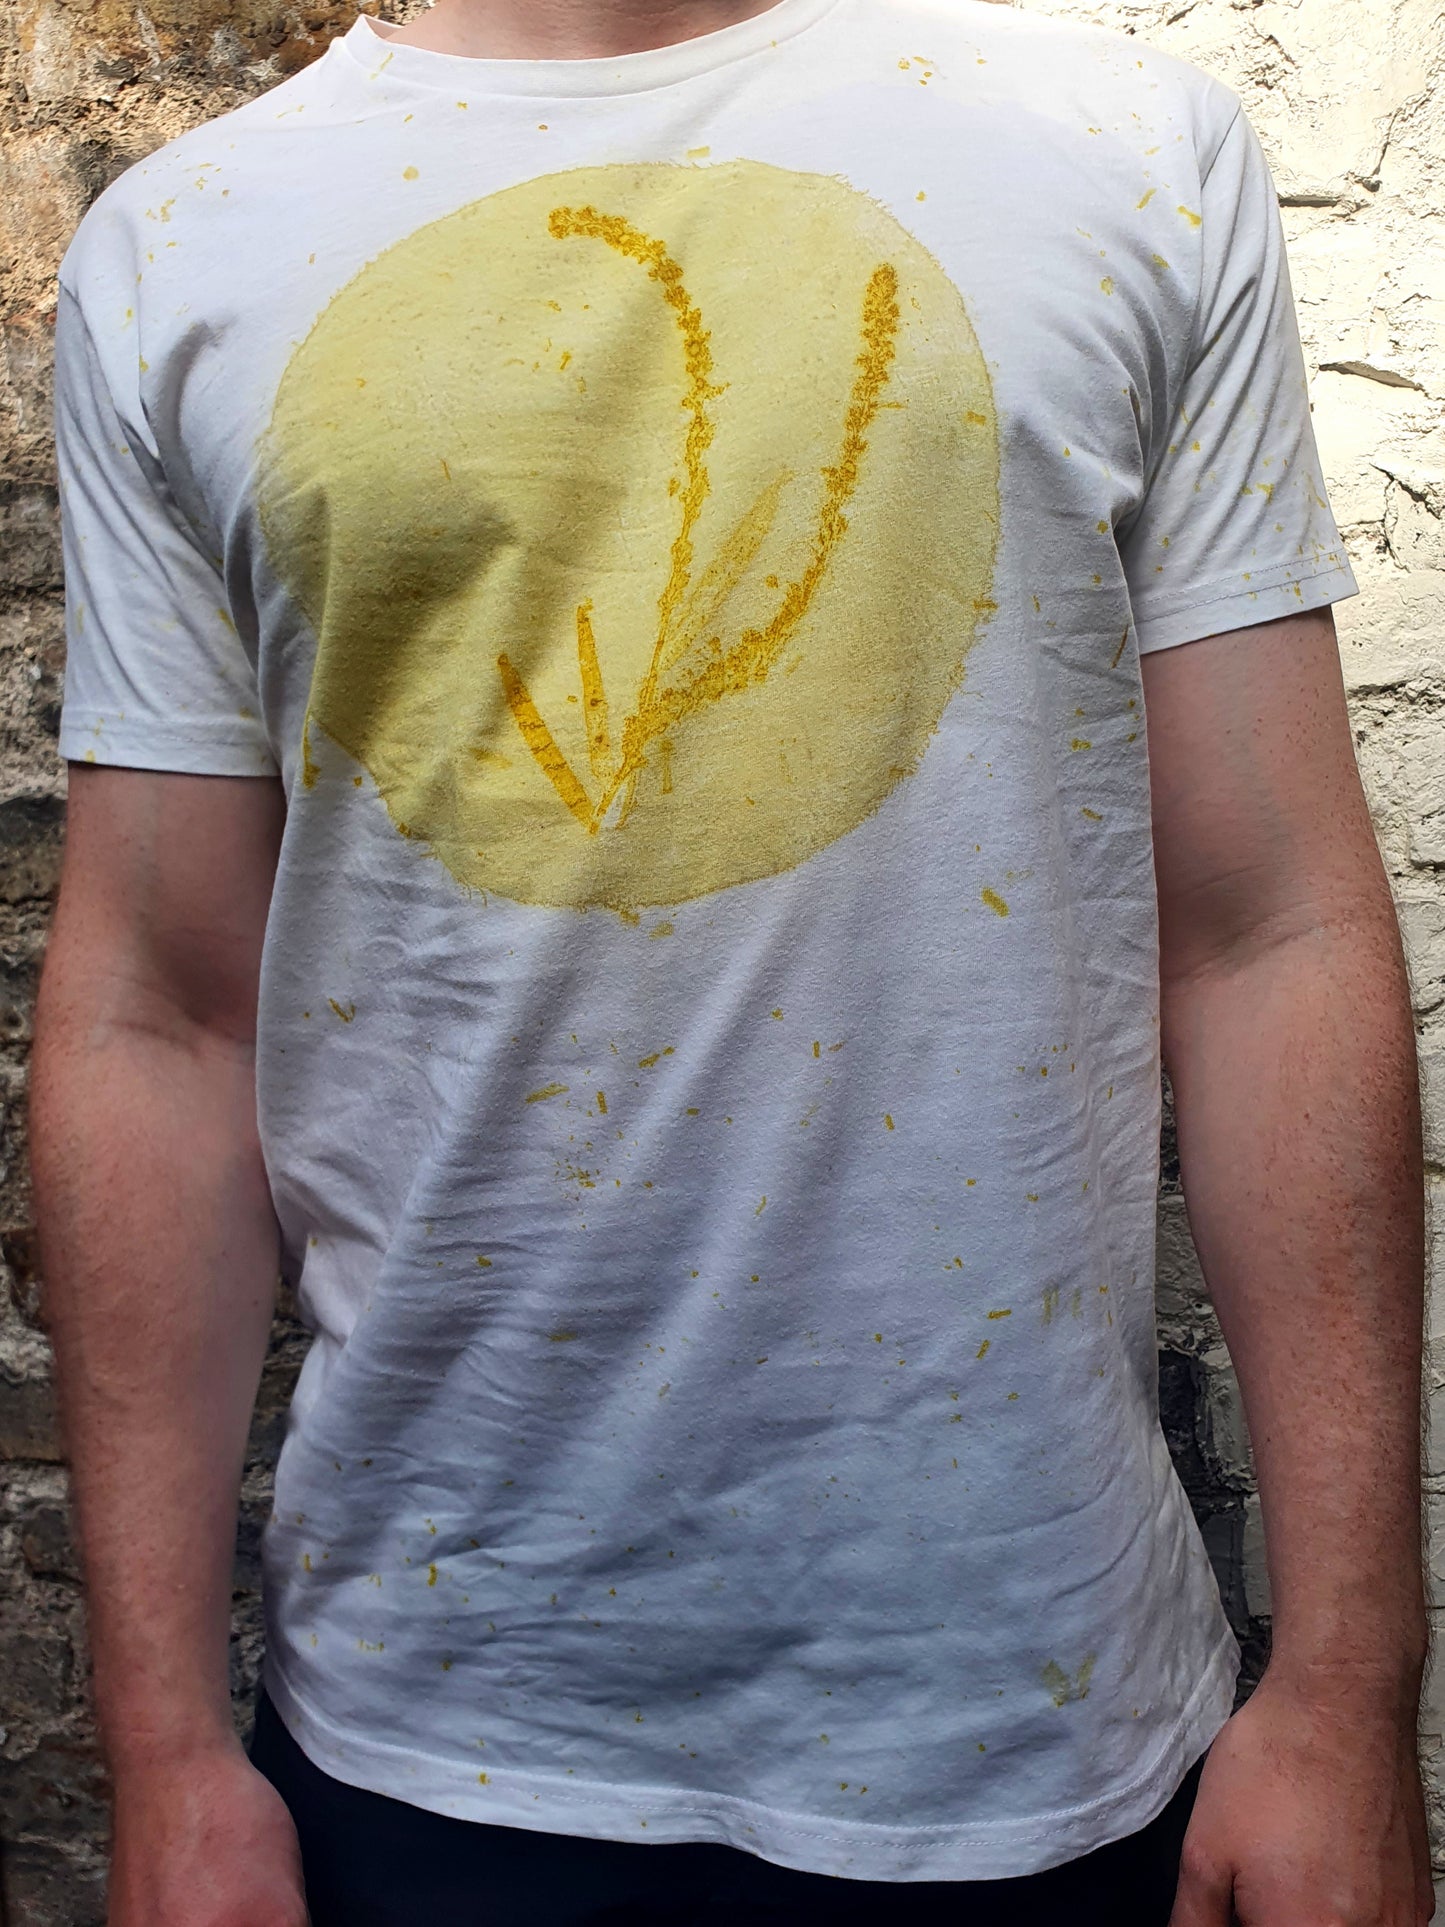 Weld Sphere Organic Cotton T-Shirt in White and Lemon